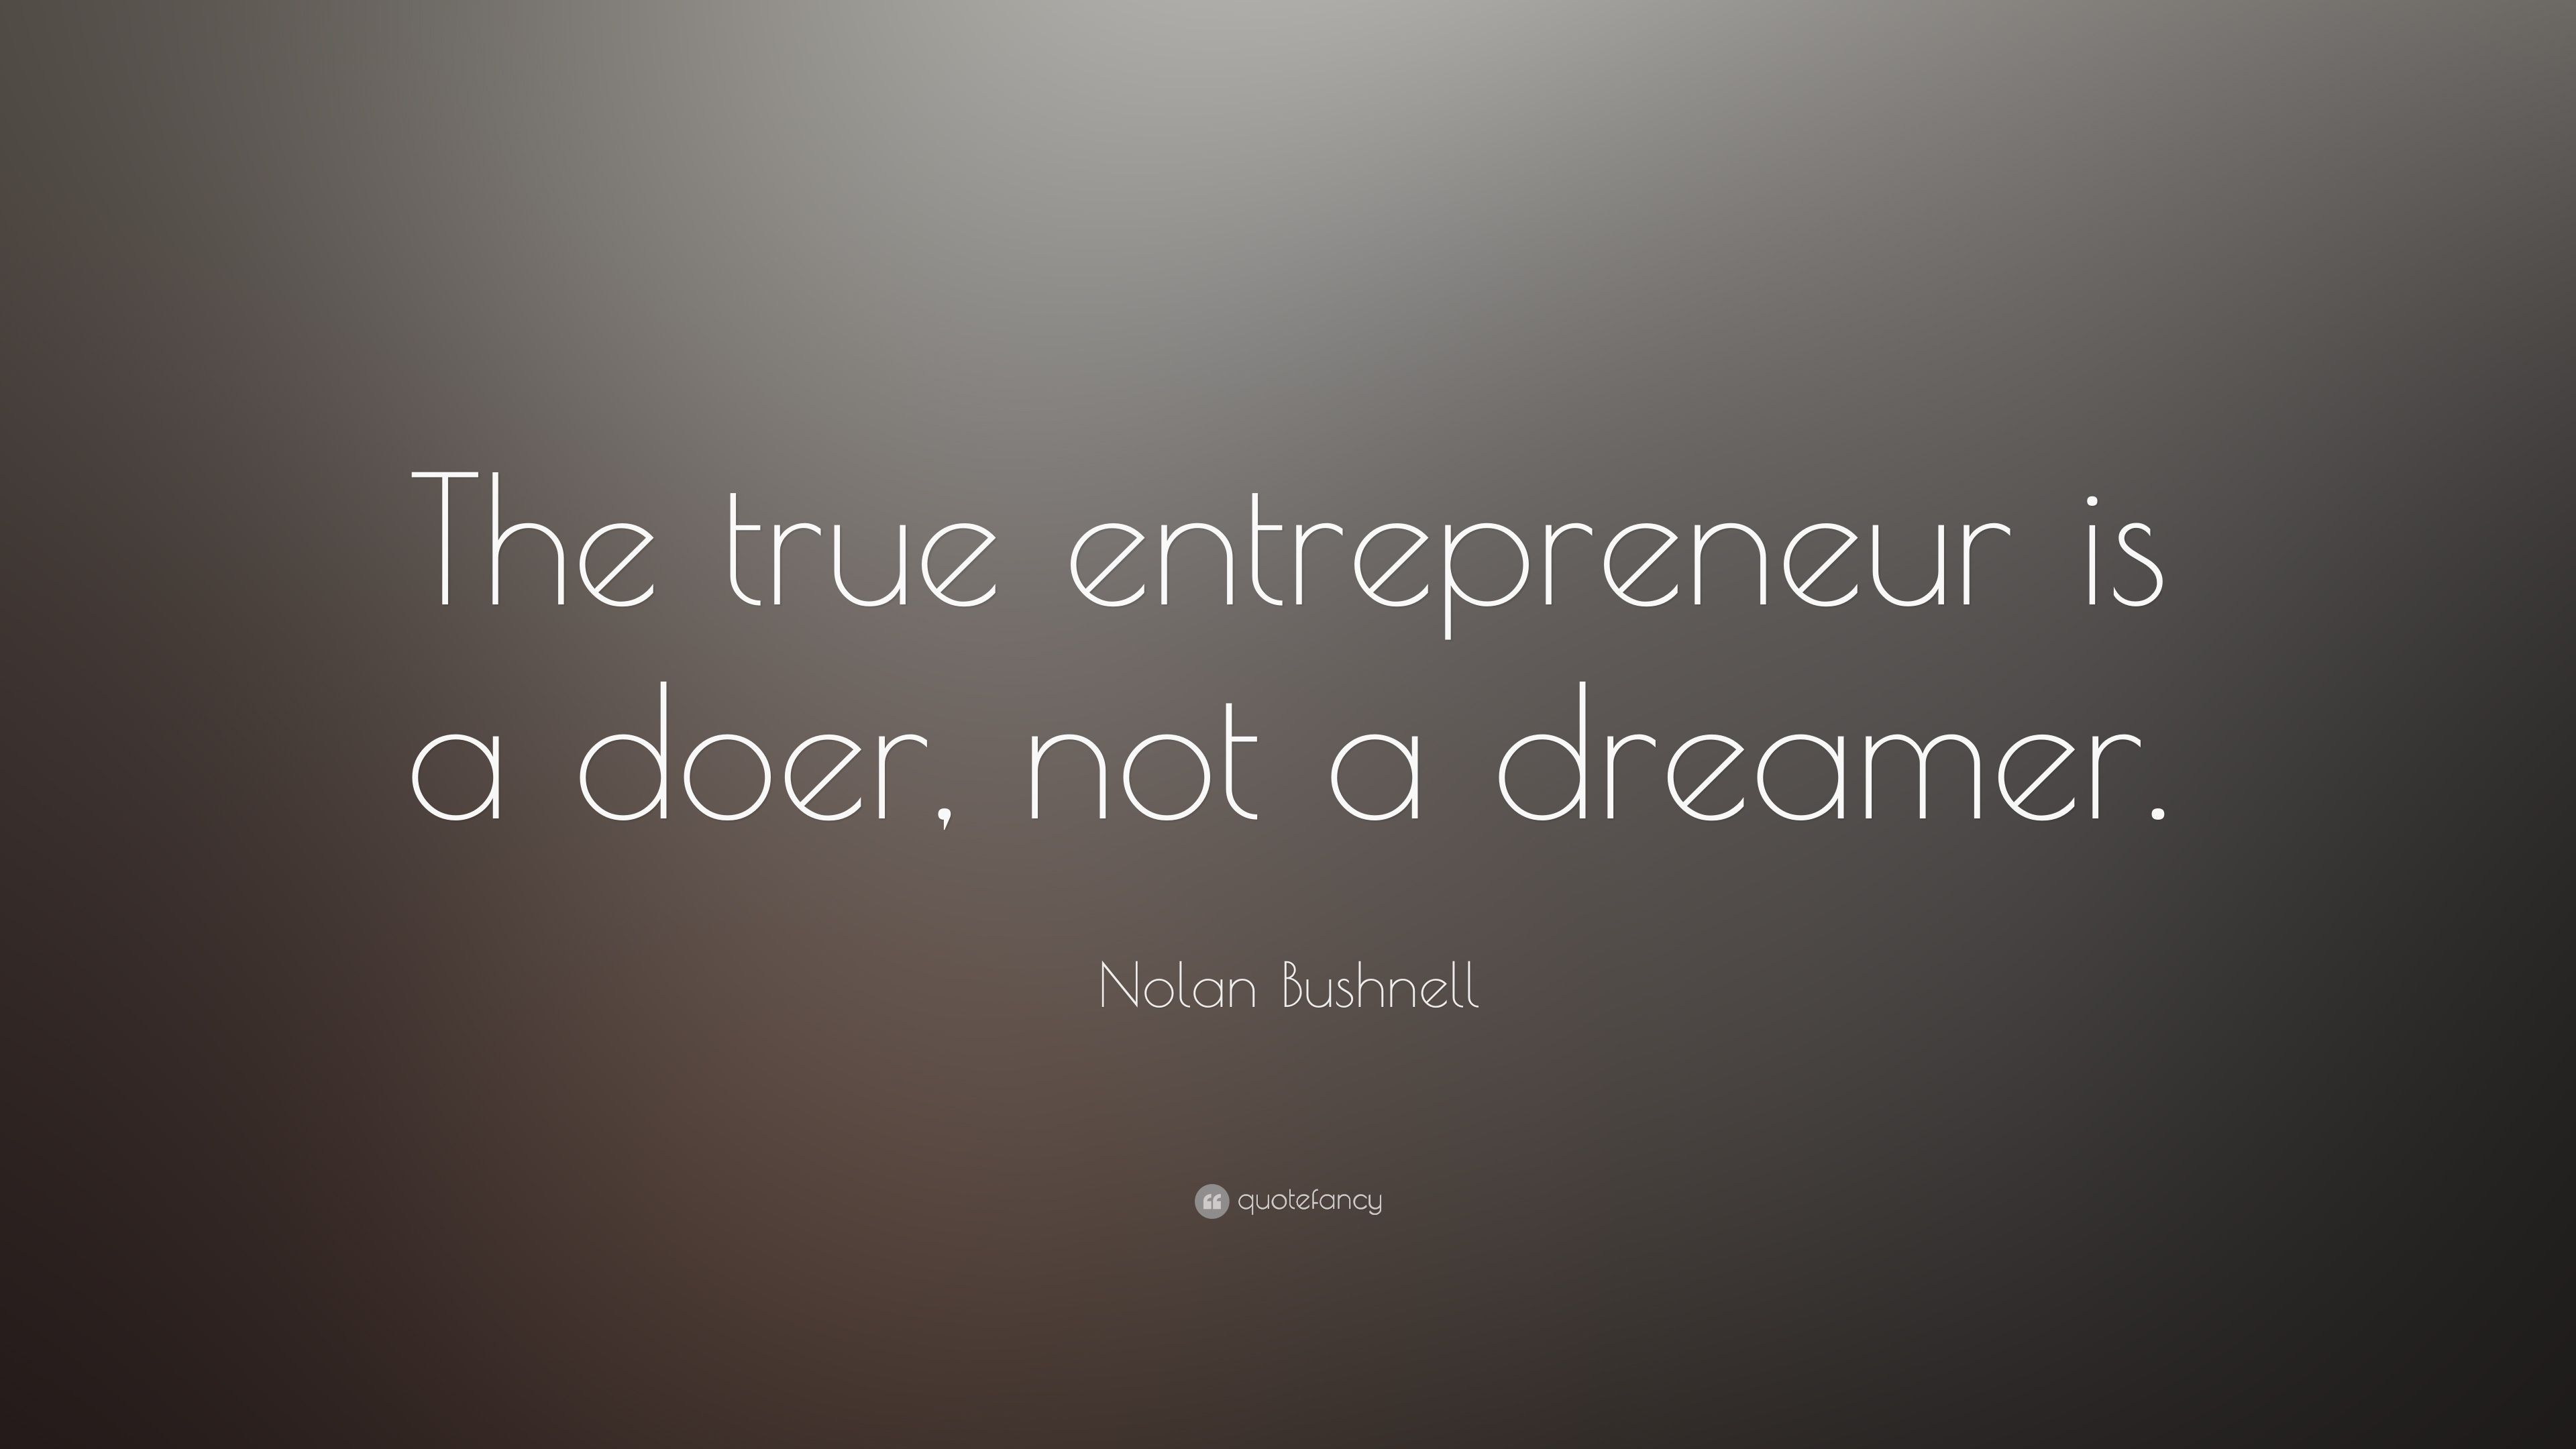 Nolan Bushnell Quote: “The true entrepreneur is a doer, not a dreamer.” (23 wallpaper)